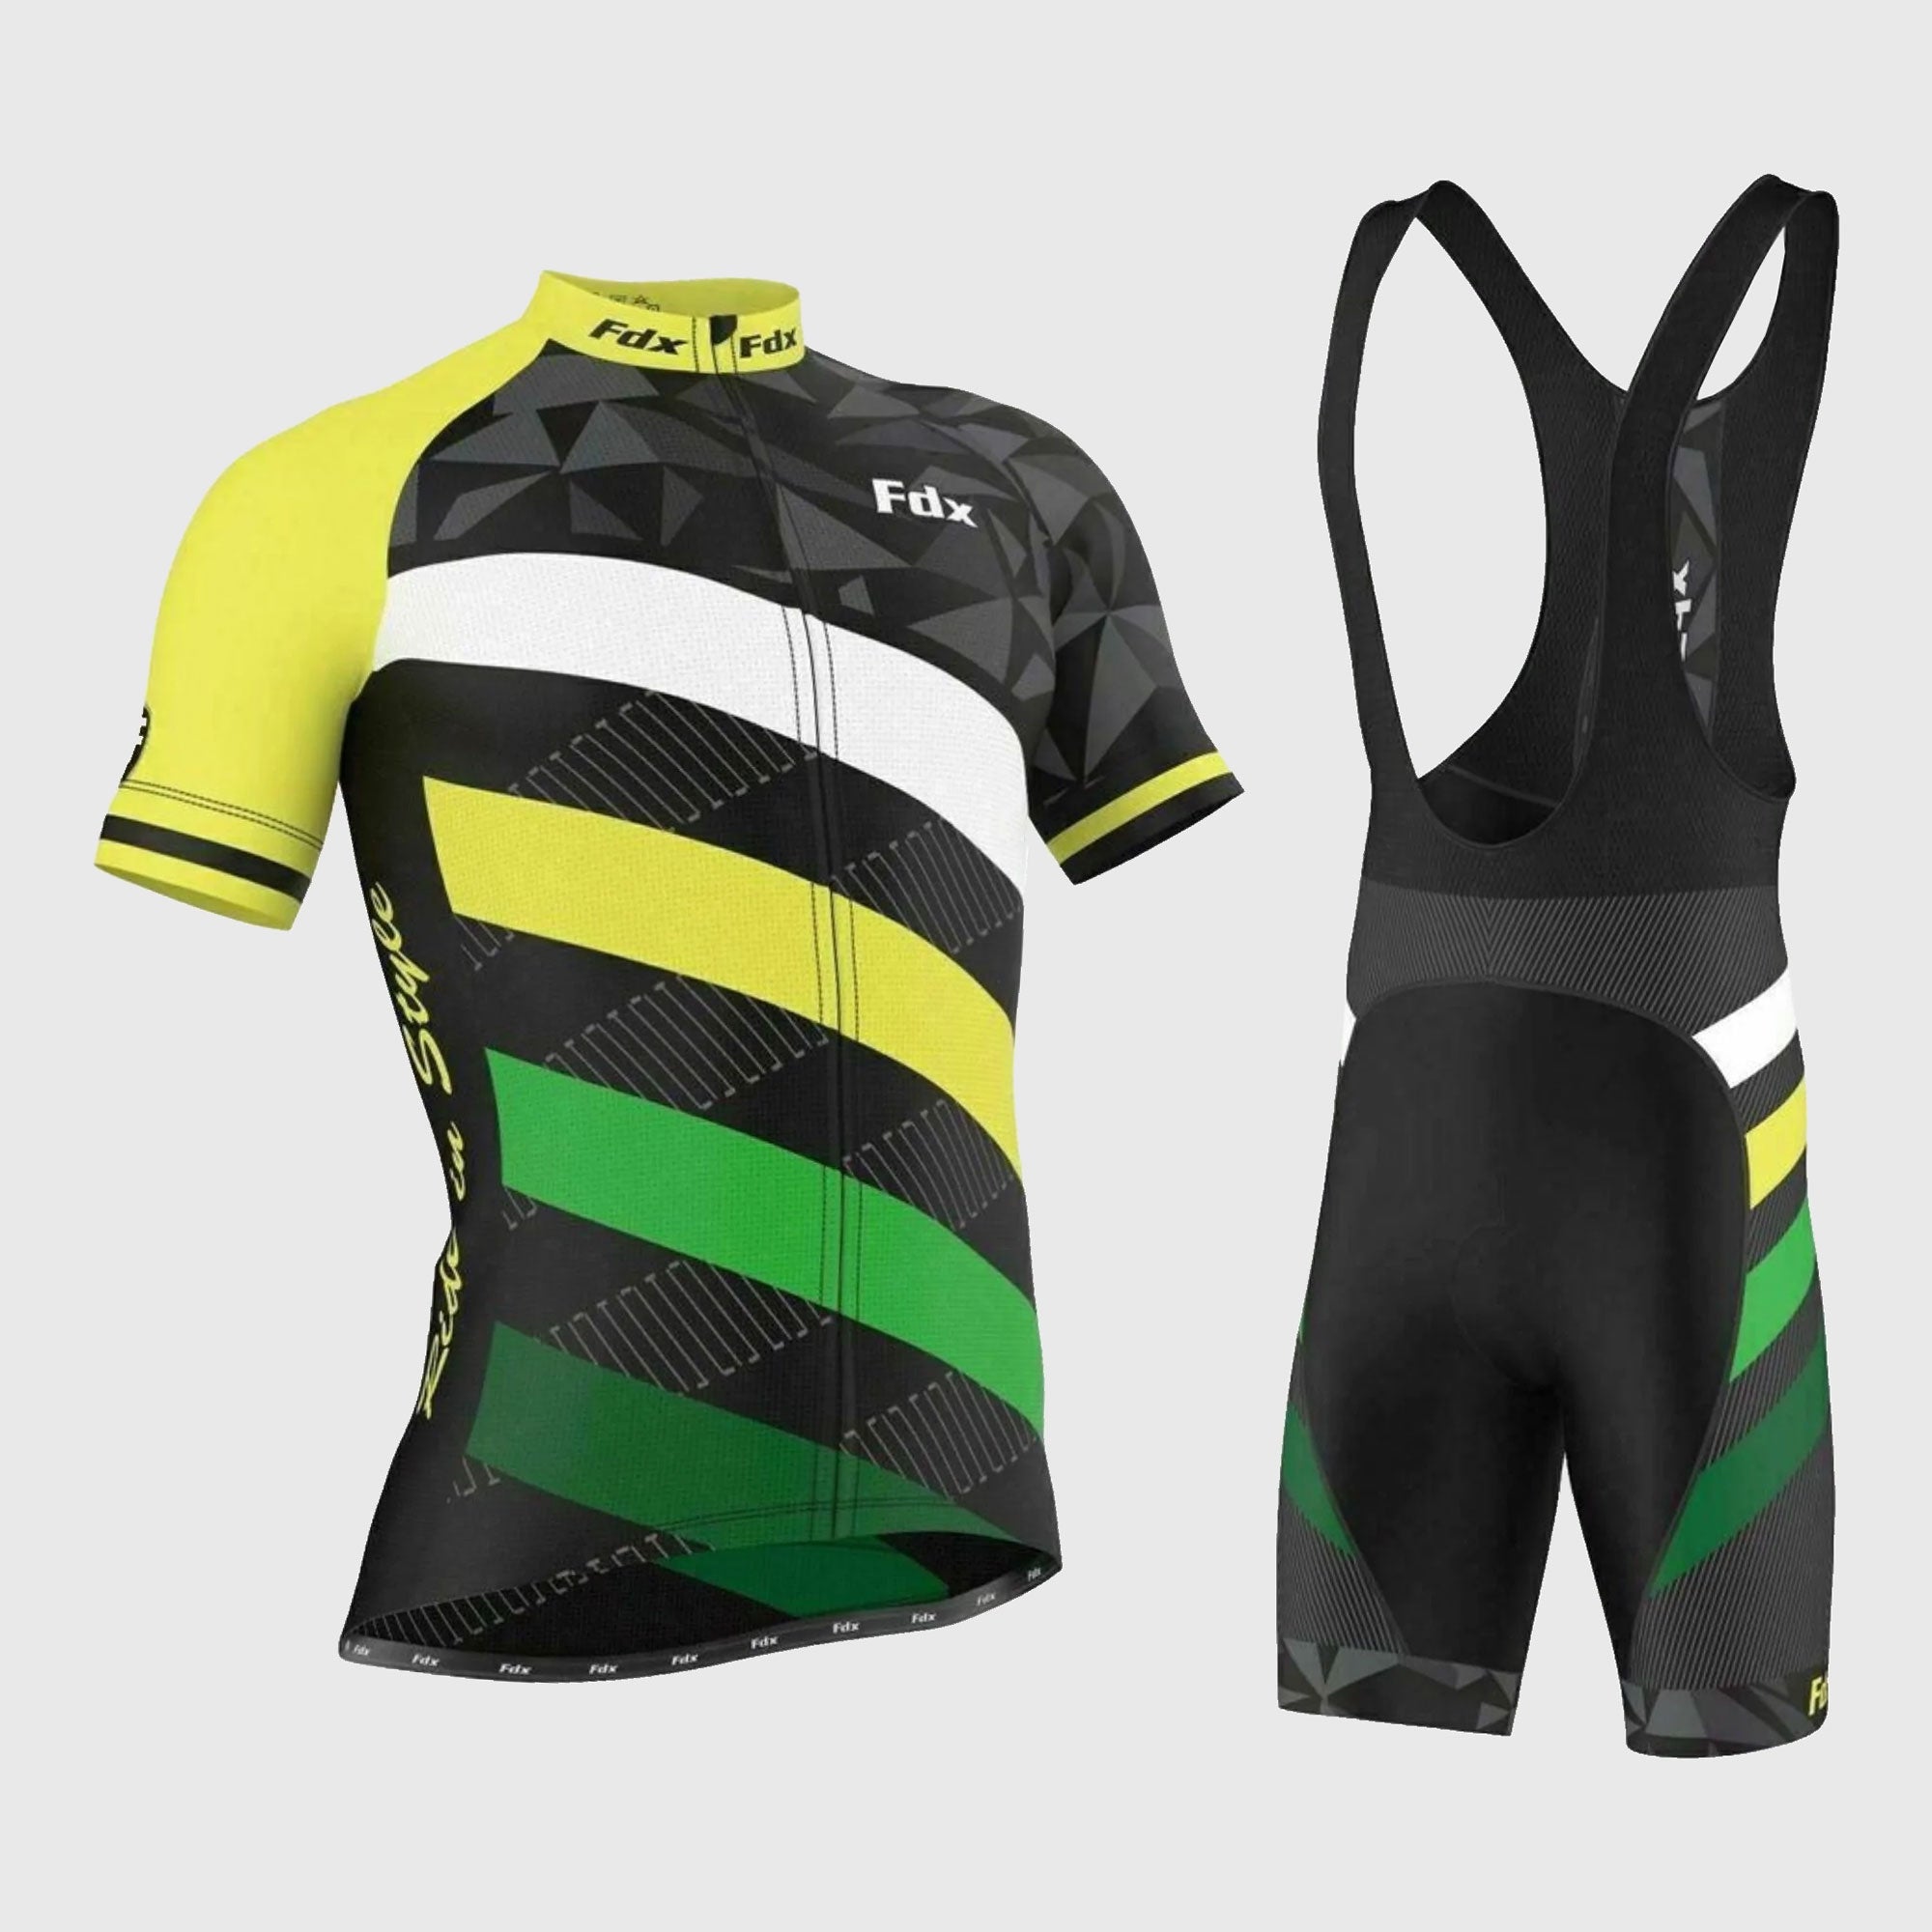 Fdx Equin Men's Yellow Set Short Sleeve Summer Cycling Jersey & Bib Shorts